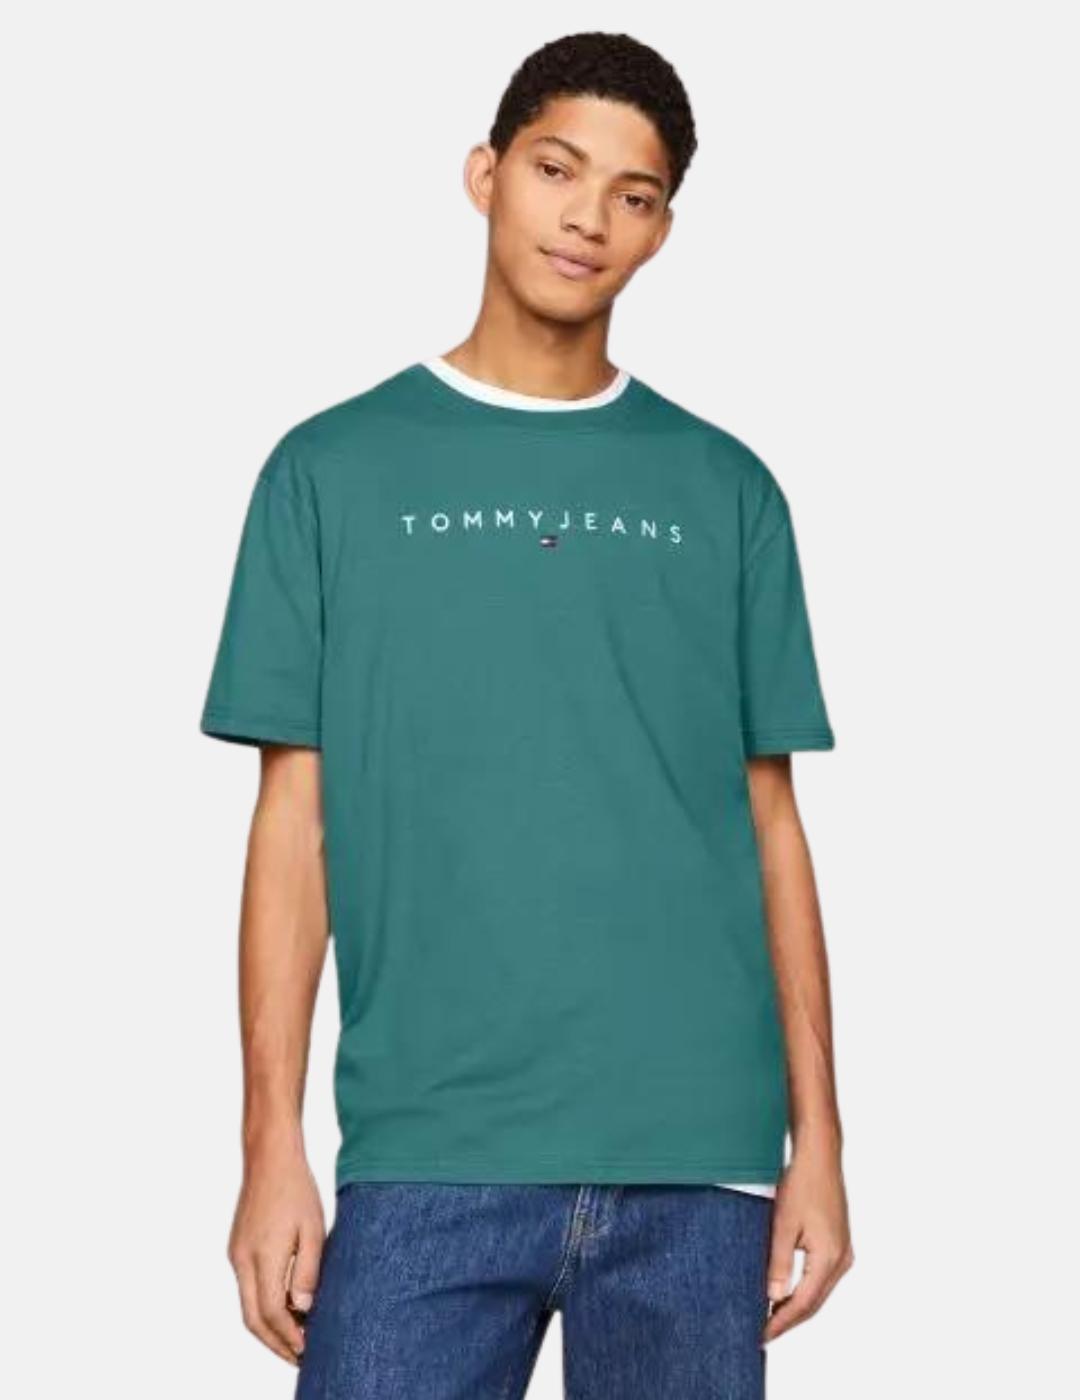 Camiseta Tommy Jeans verde basic para hombre